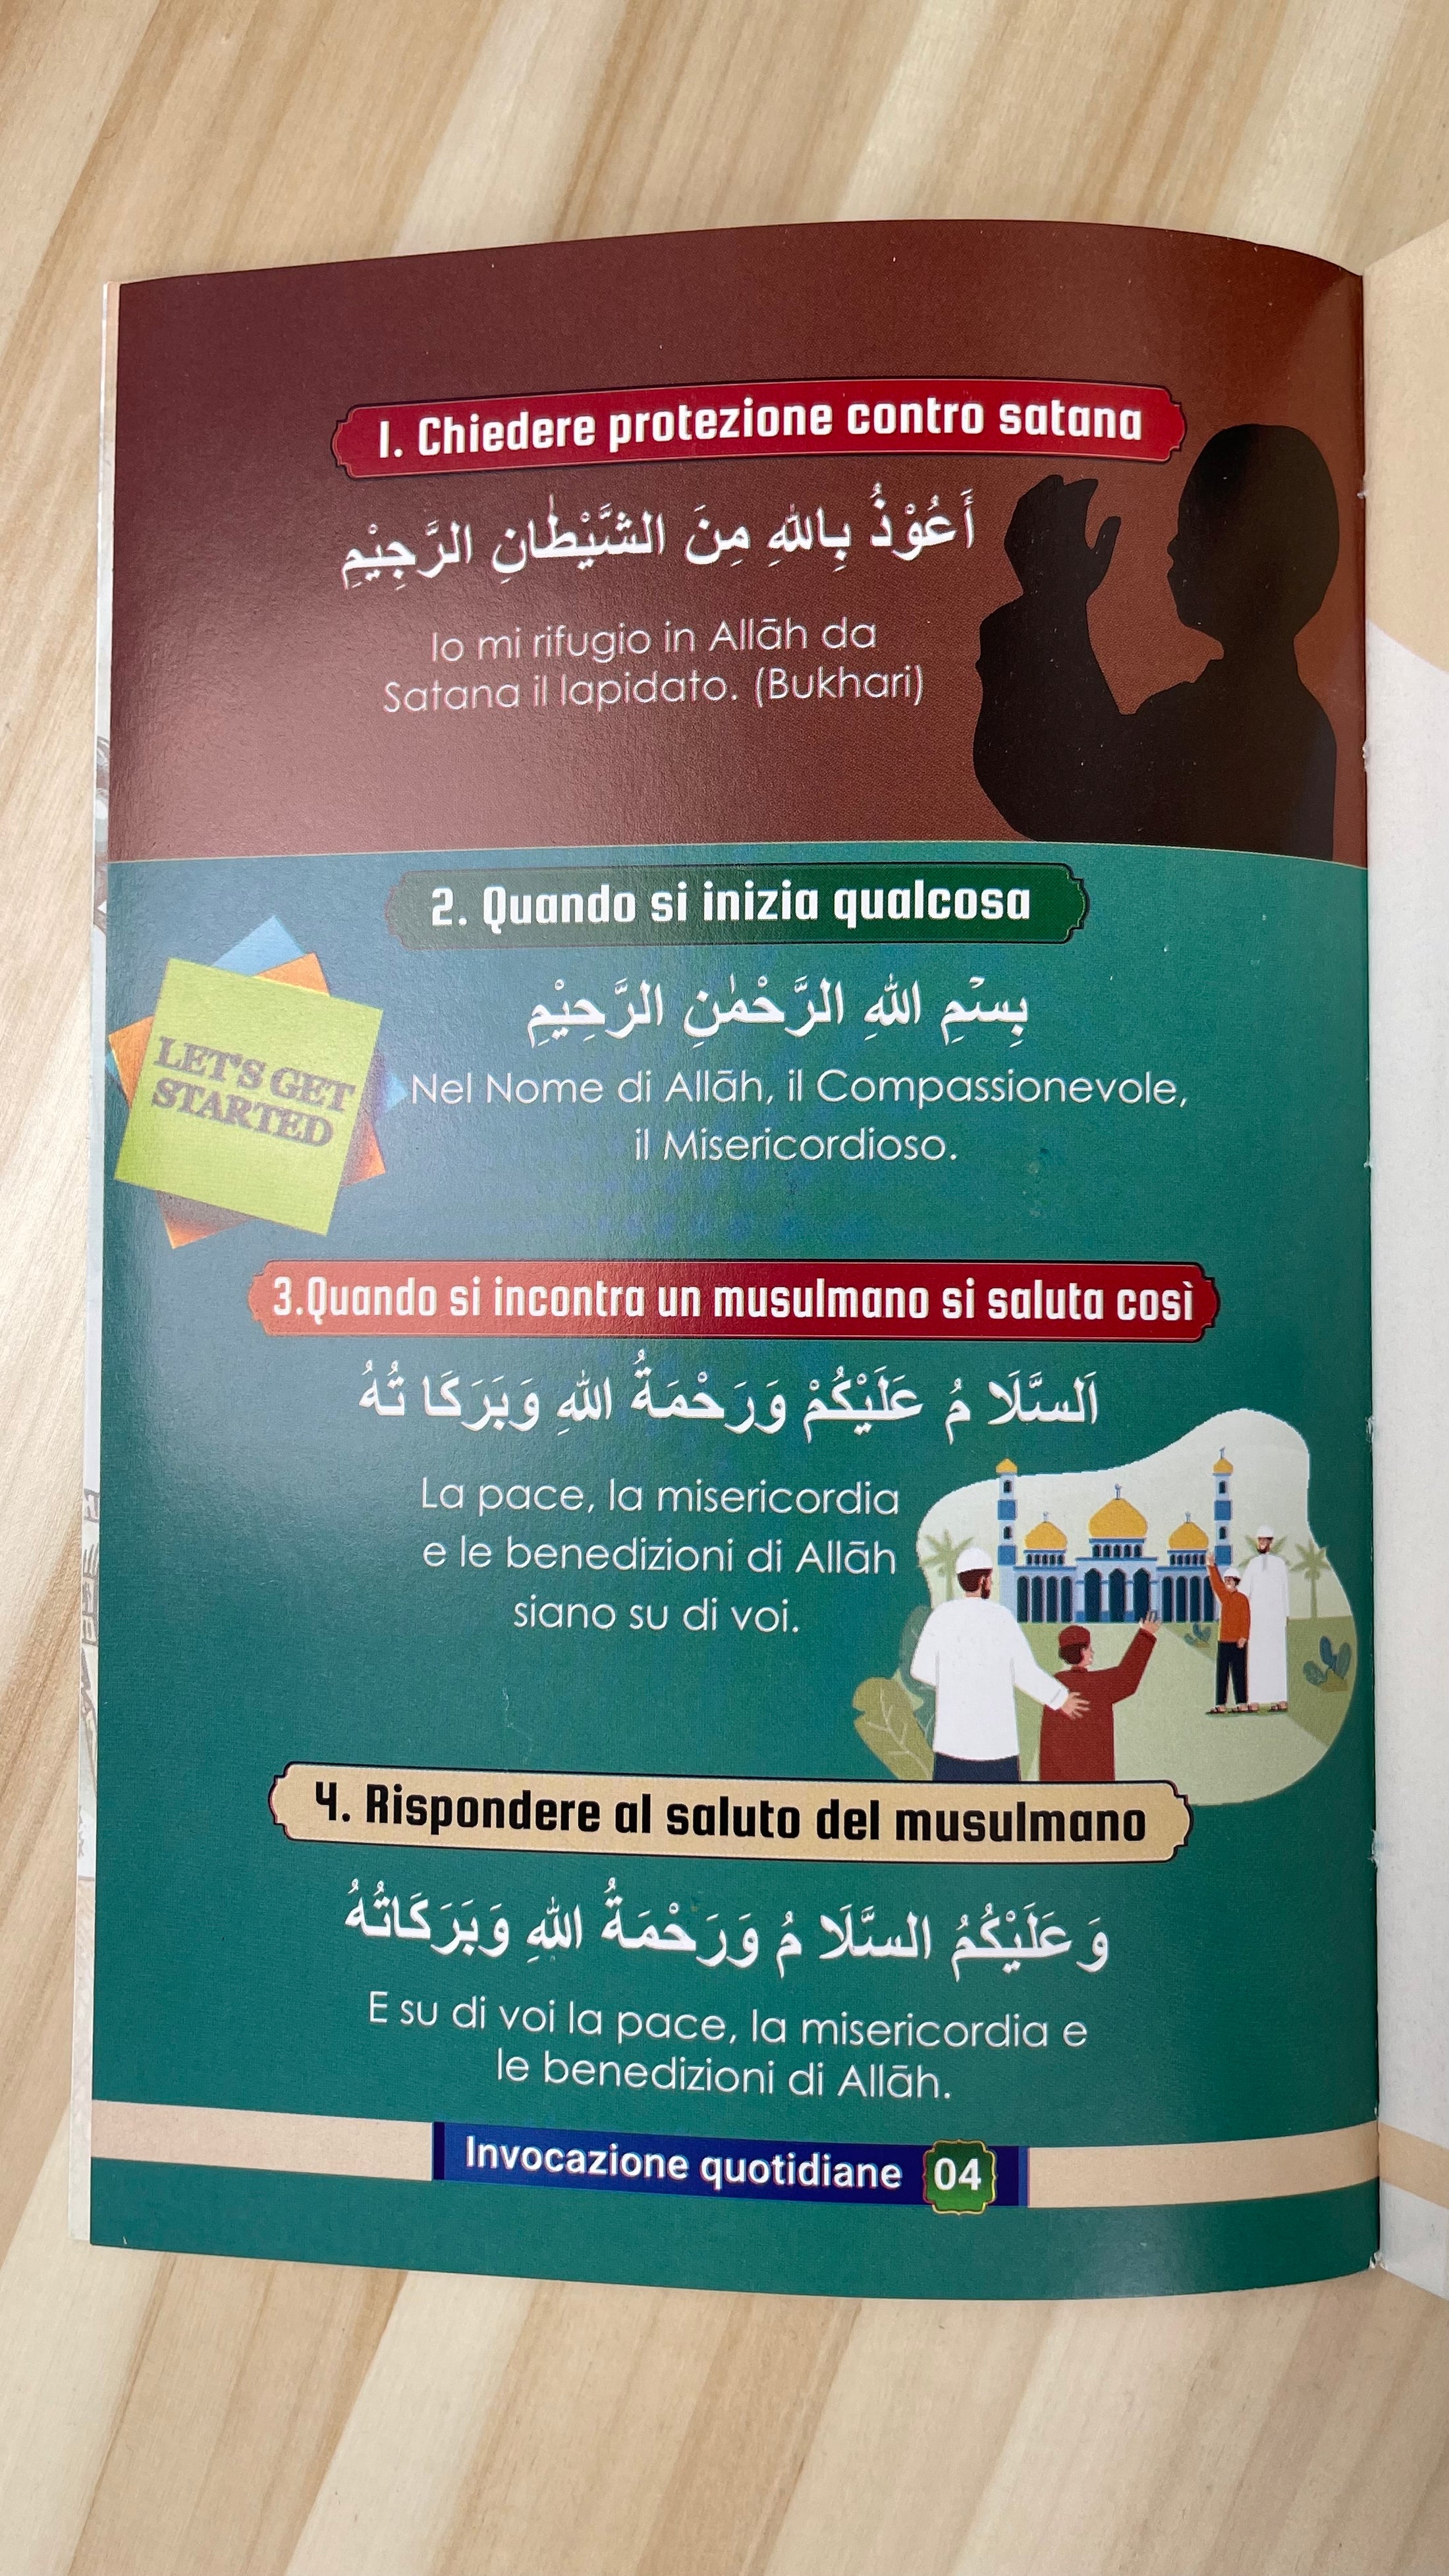 Invocazioni quotidiane e Hadith - Hijab Paradise- invocazioni -duaa - protezione contro satana - duaa in arabo e in italiano